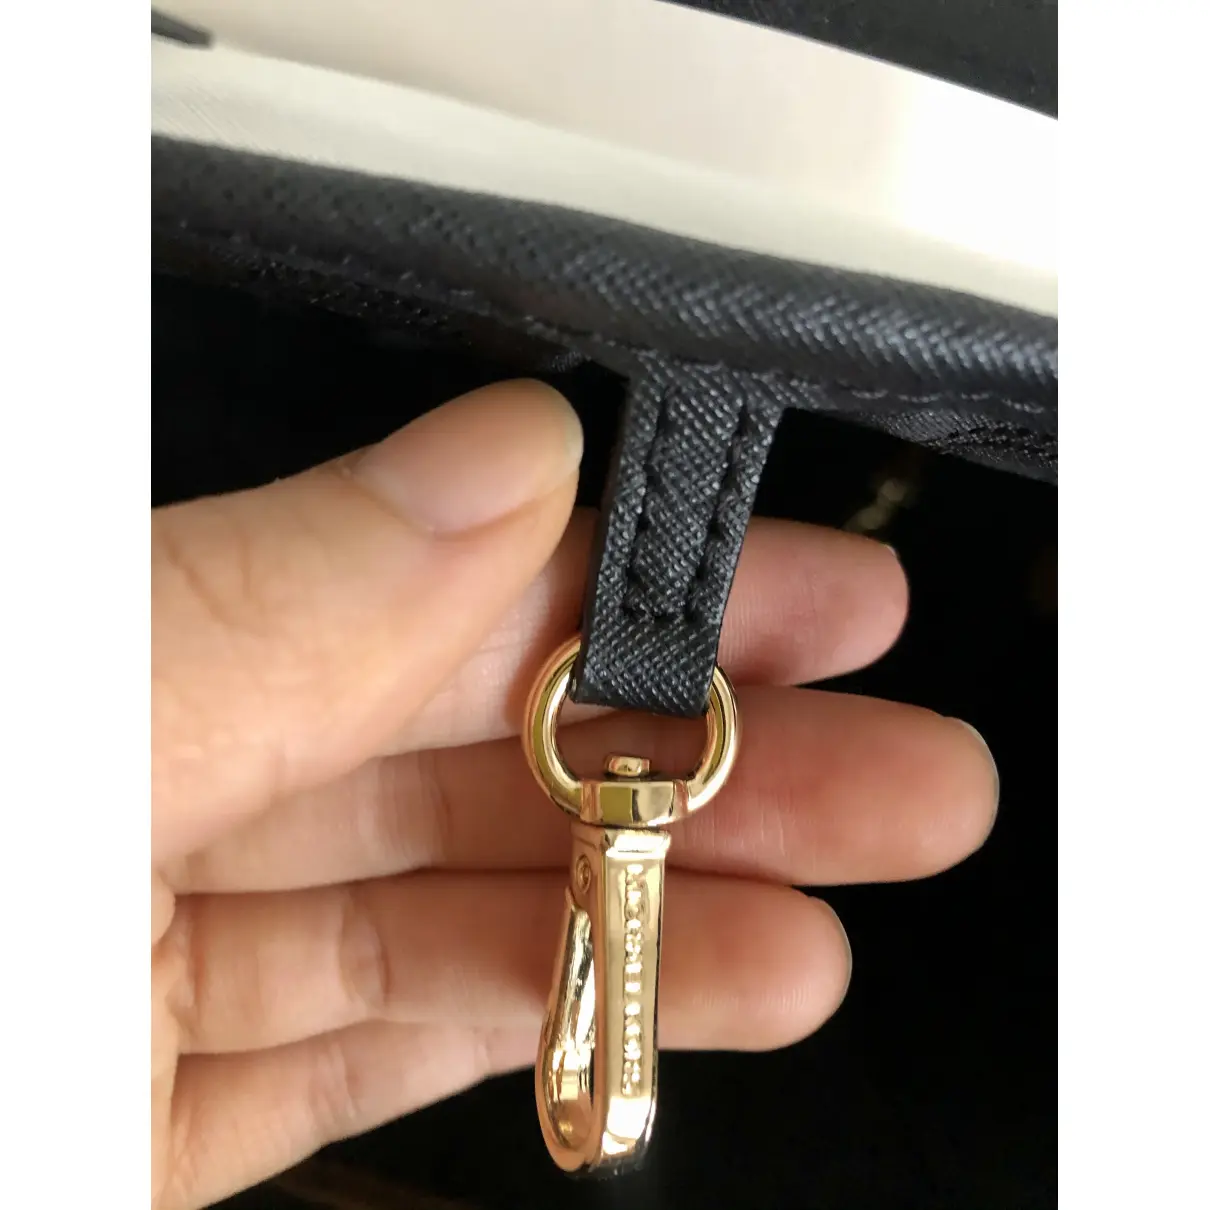 Jet Set leather handbag Michael Kors